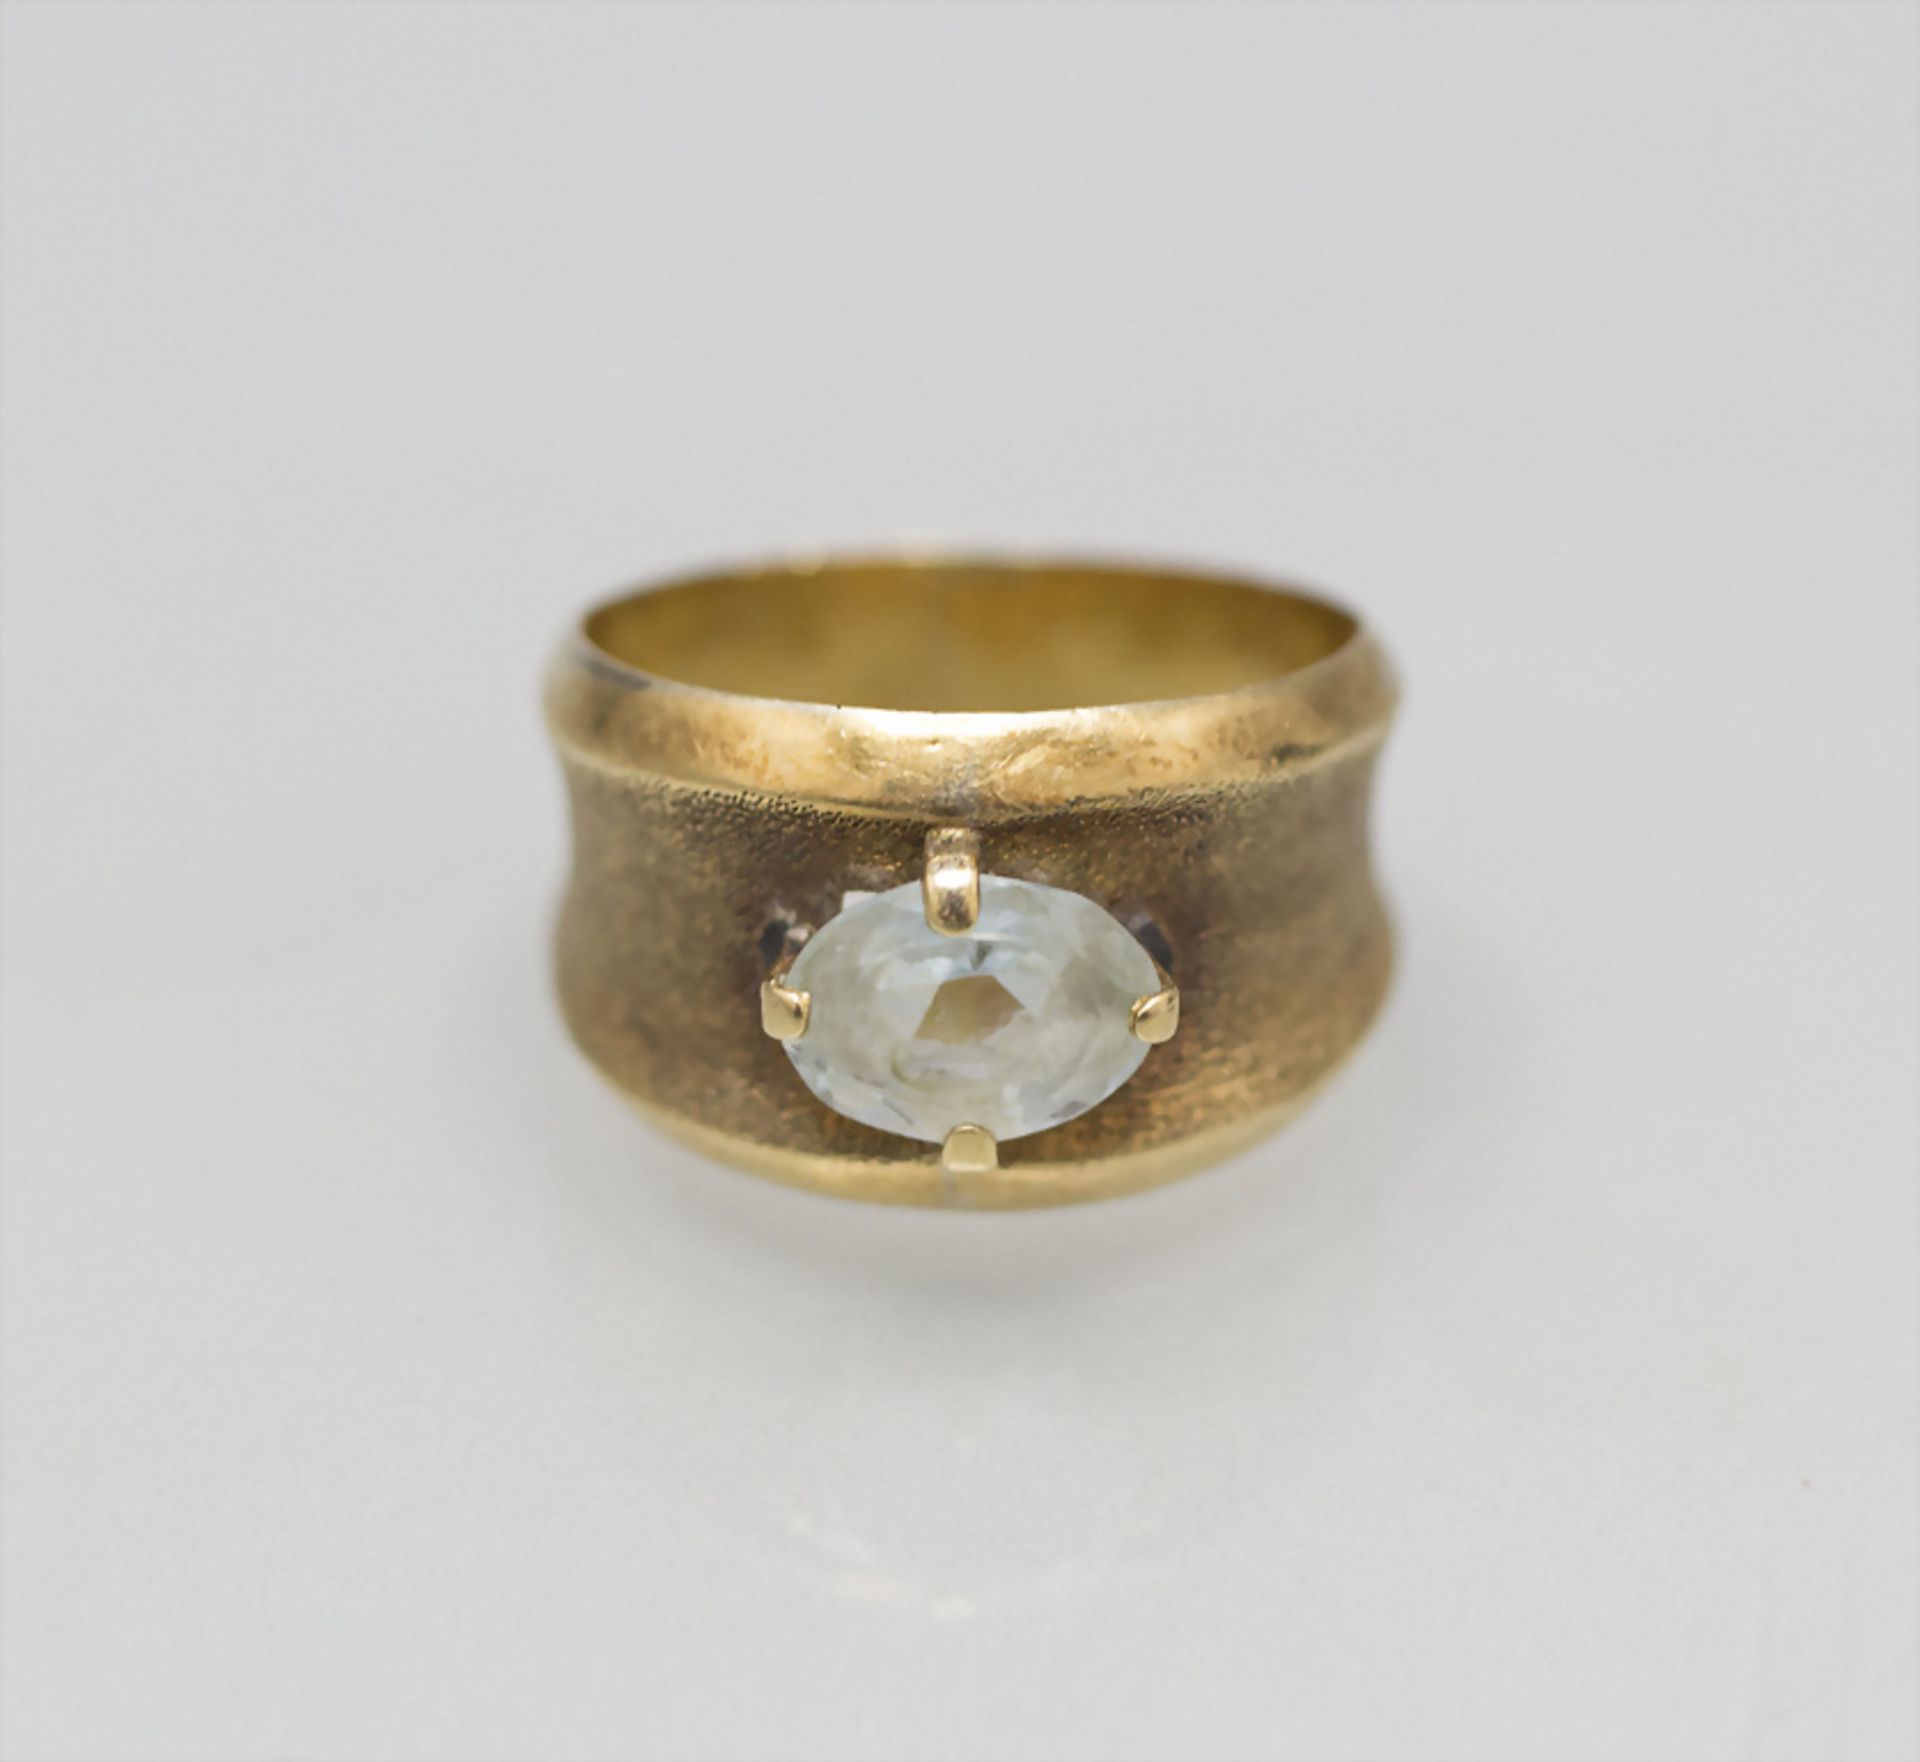 Damenring mit Aquamarin / A ladies 18 ct gold ring with an aquamarine